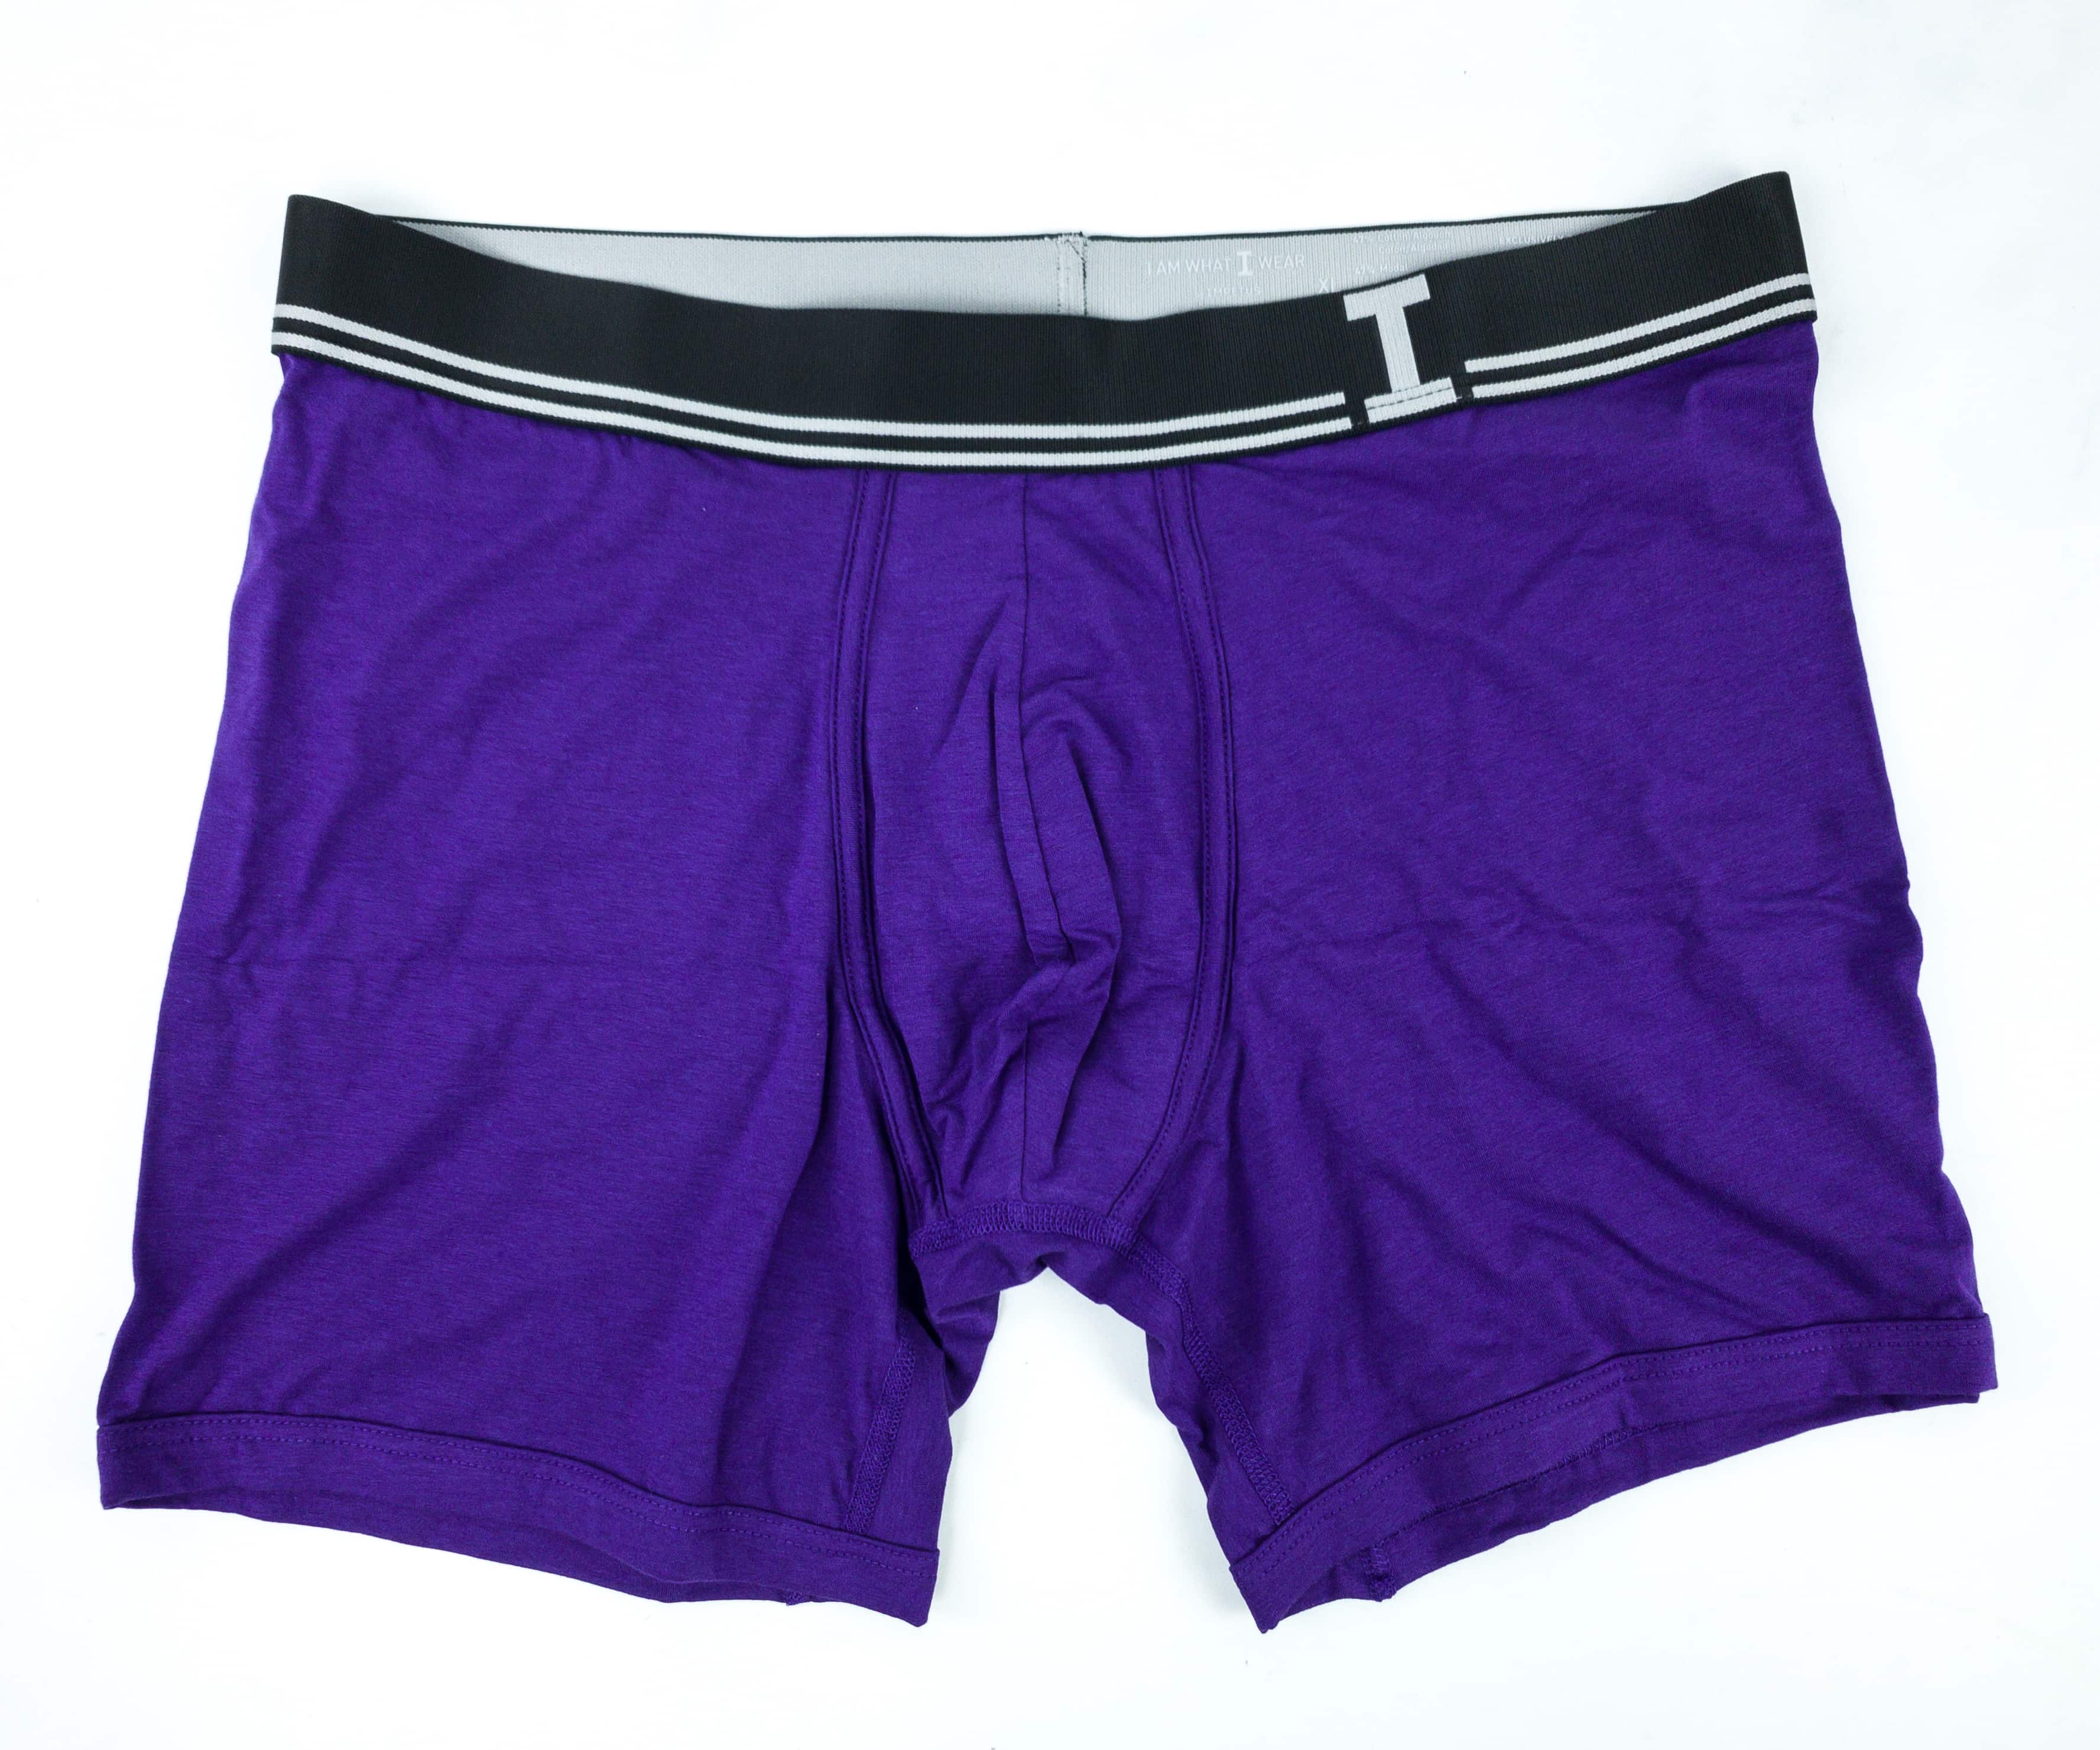 Freshpair - Underwear Expert Affiliate Banners :: Behance